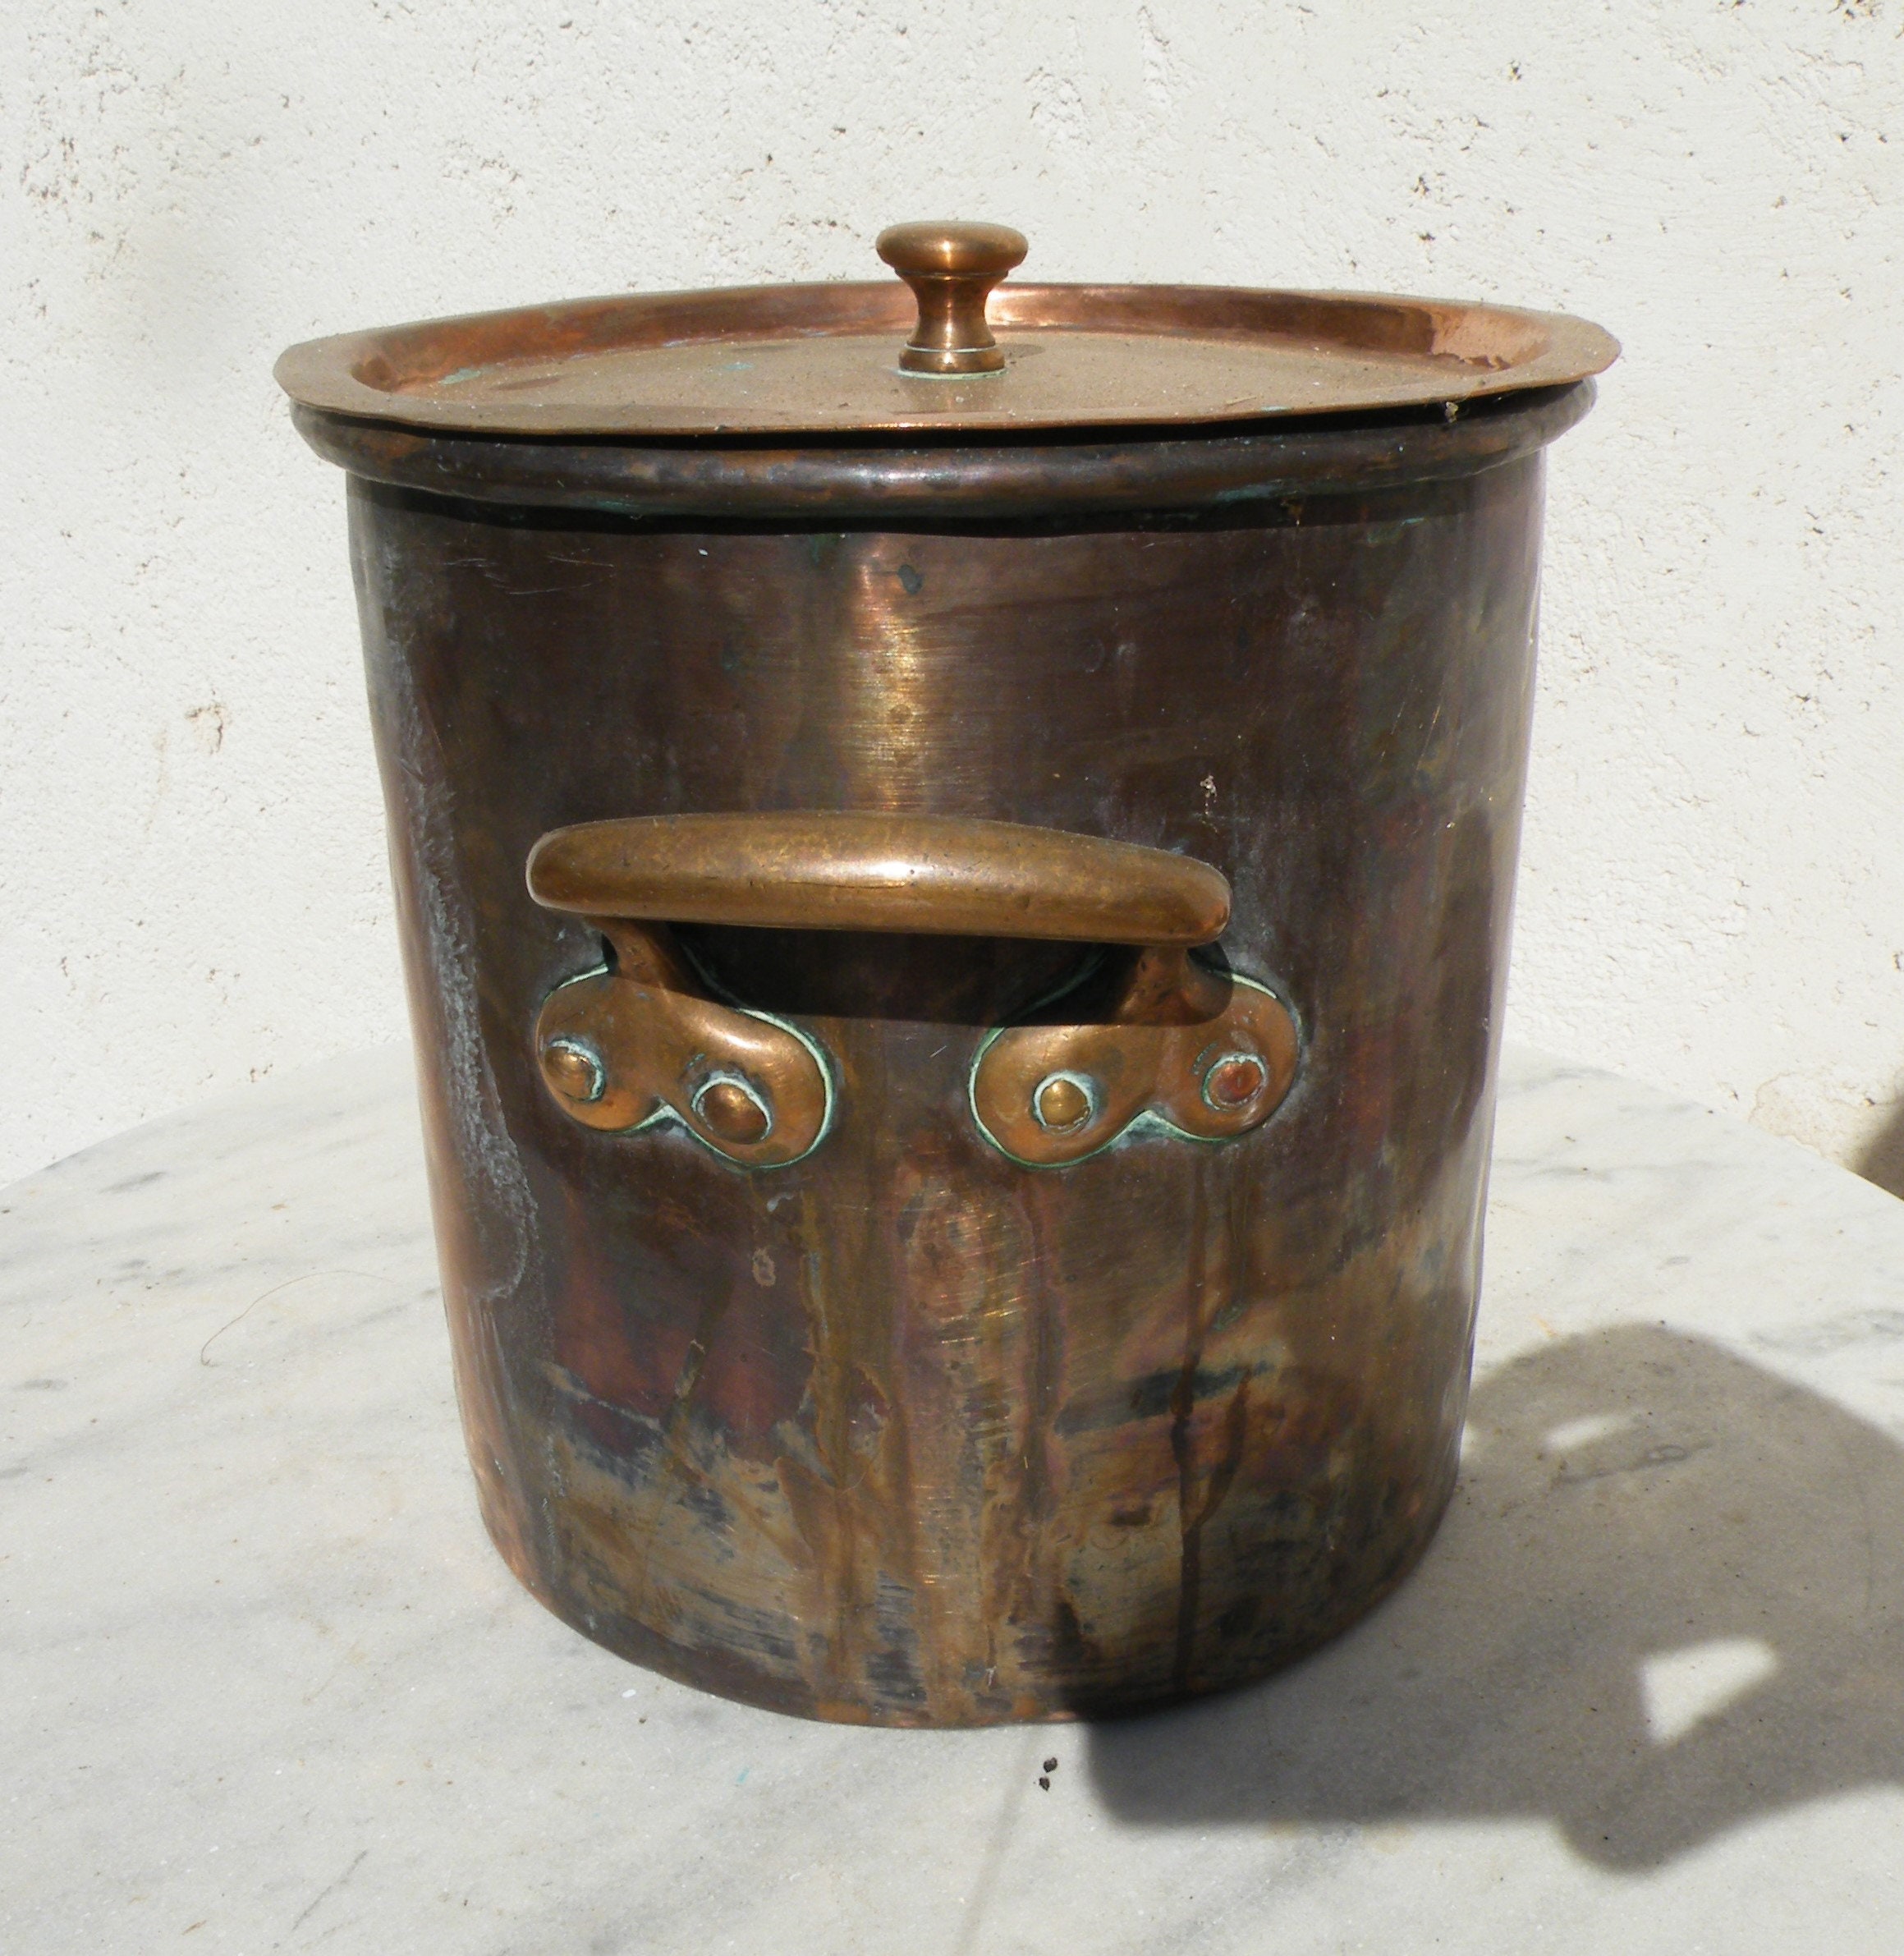 Rare Presto Pride Bakelite Handle Copper Bottom Retro Engraved Lidded  Cookware Set 1950s 